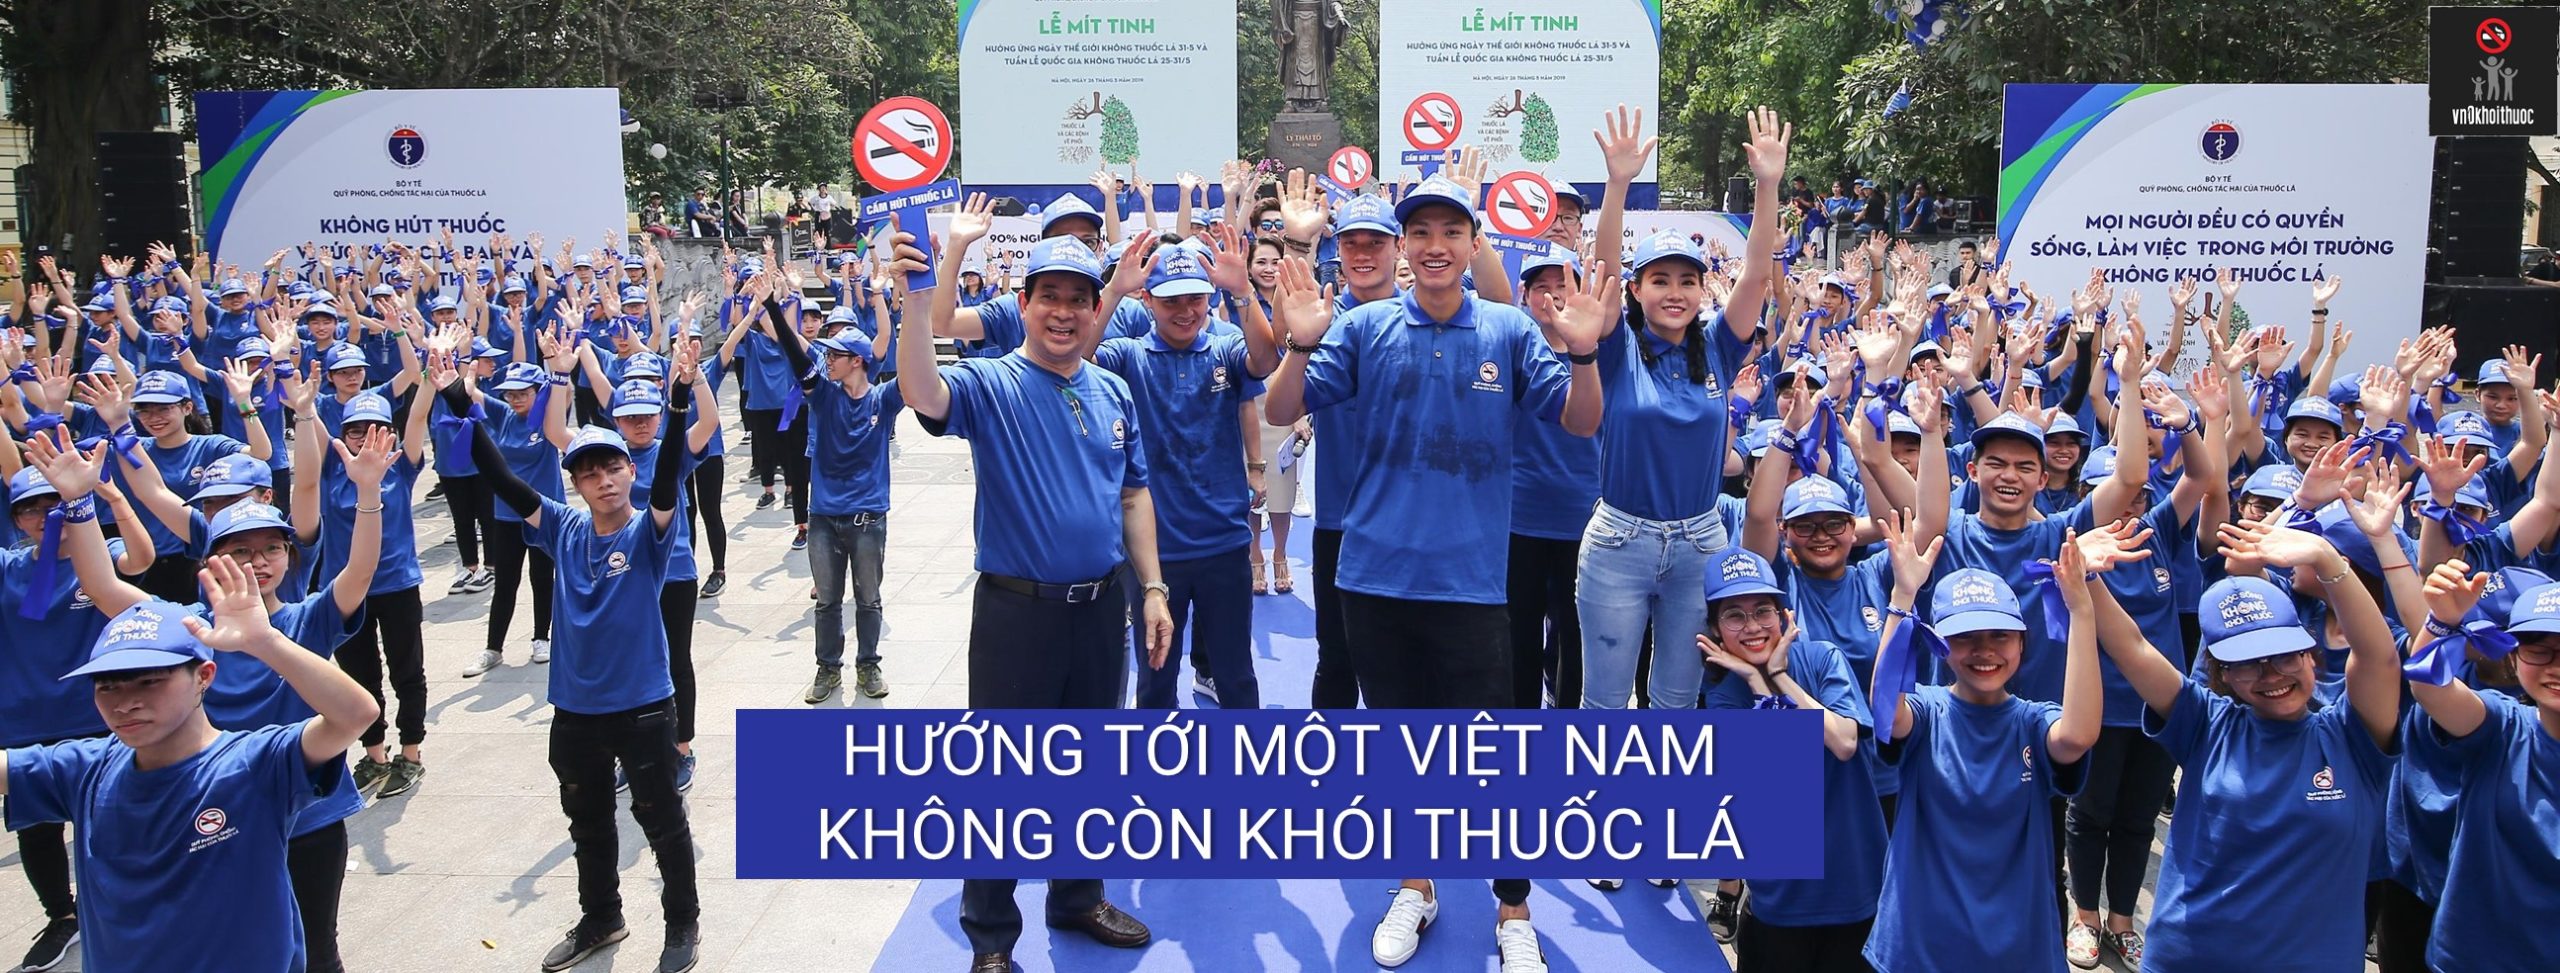 Vietnam - Youth organizing